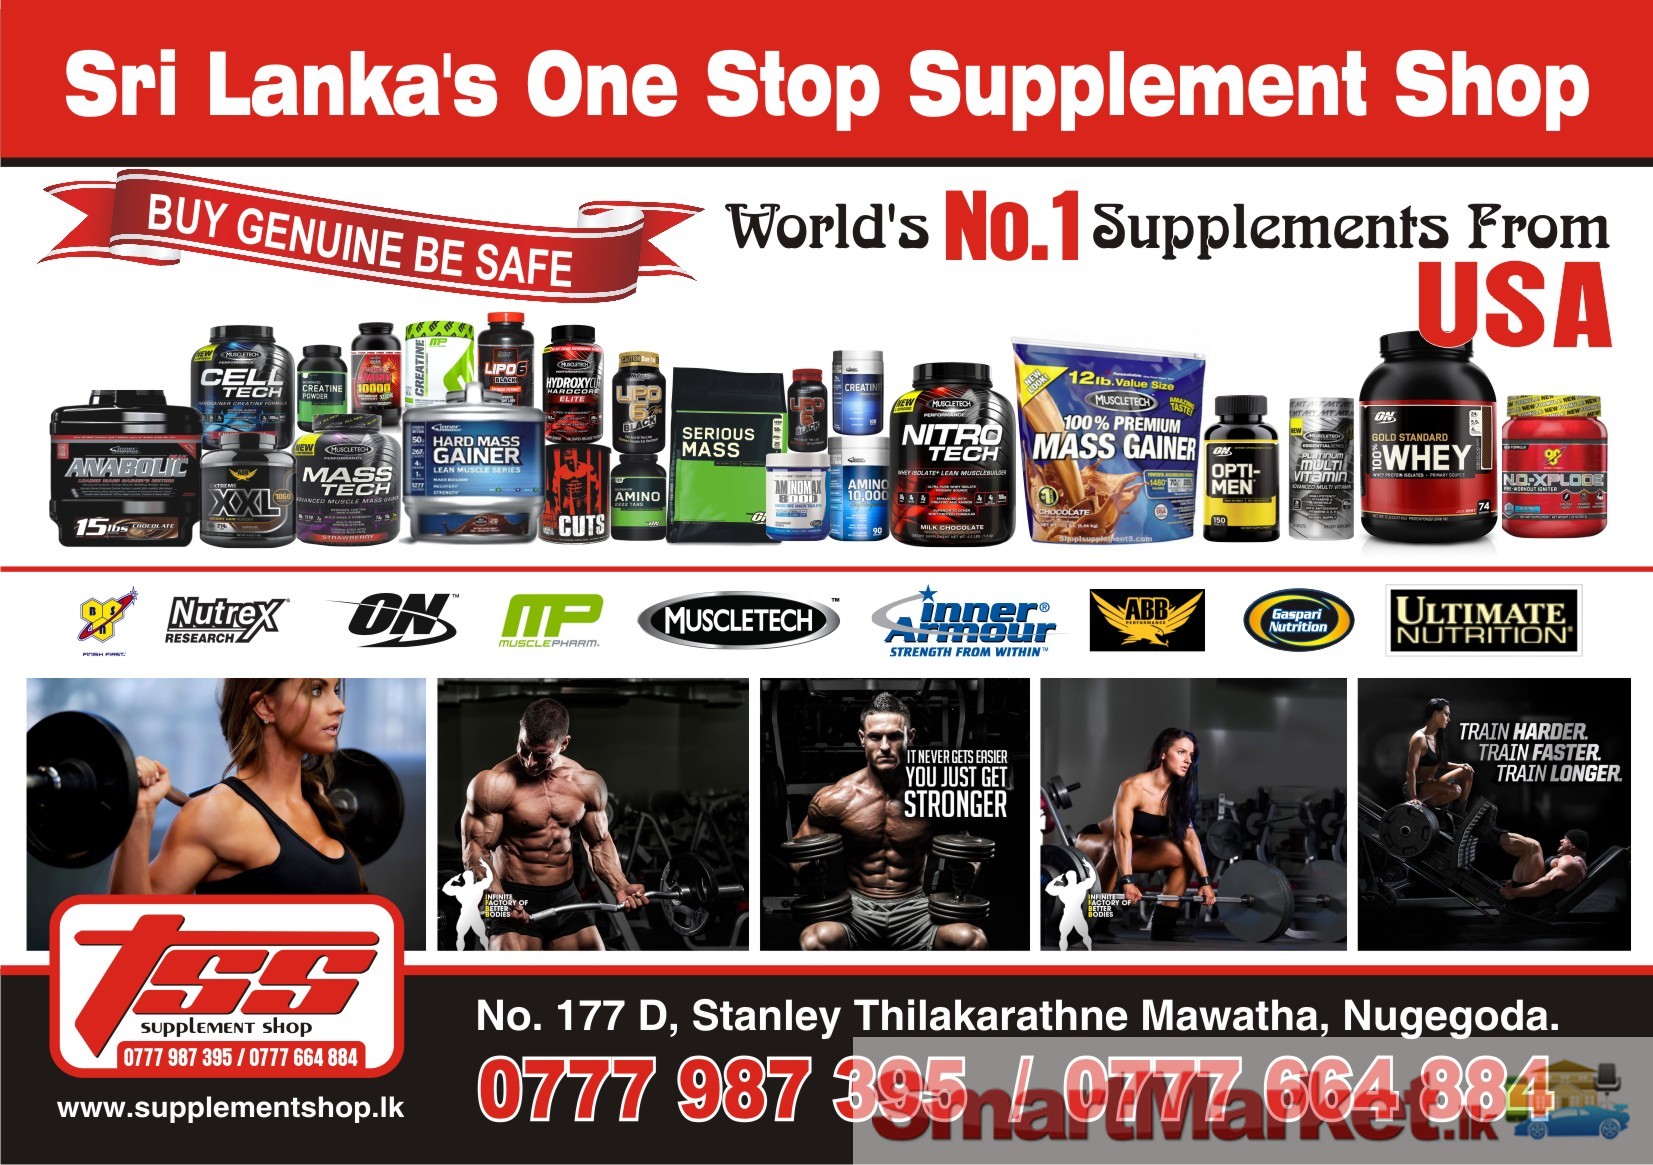 Bodybuilding supplements for sale in Sri Lanka